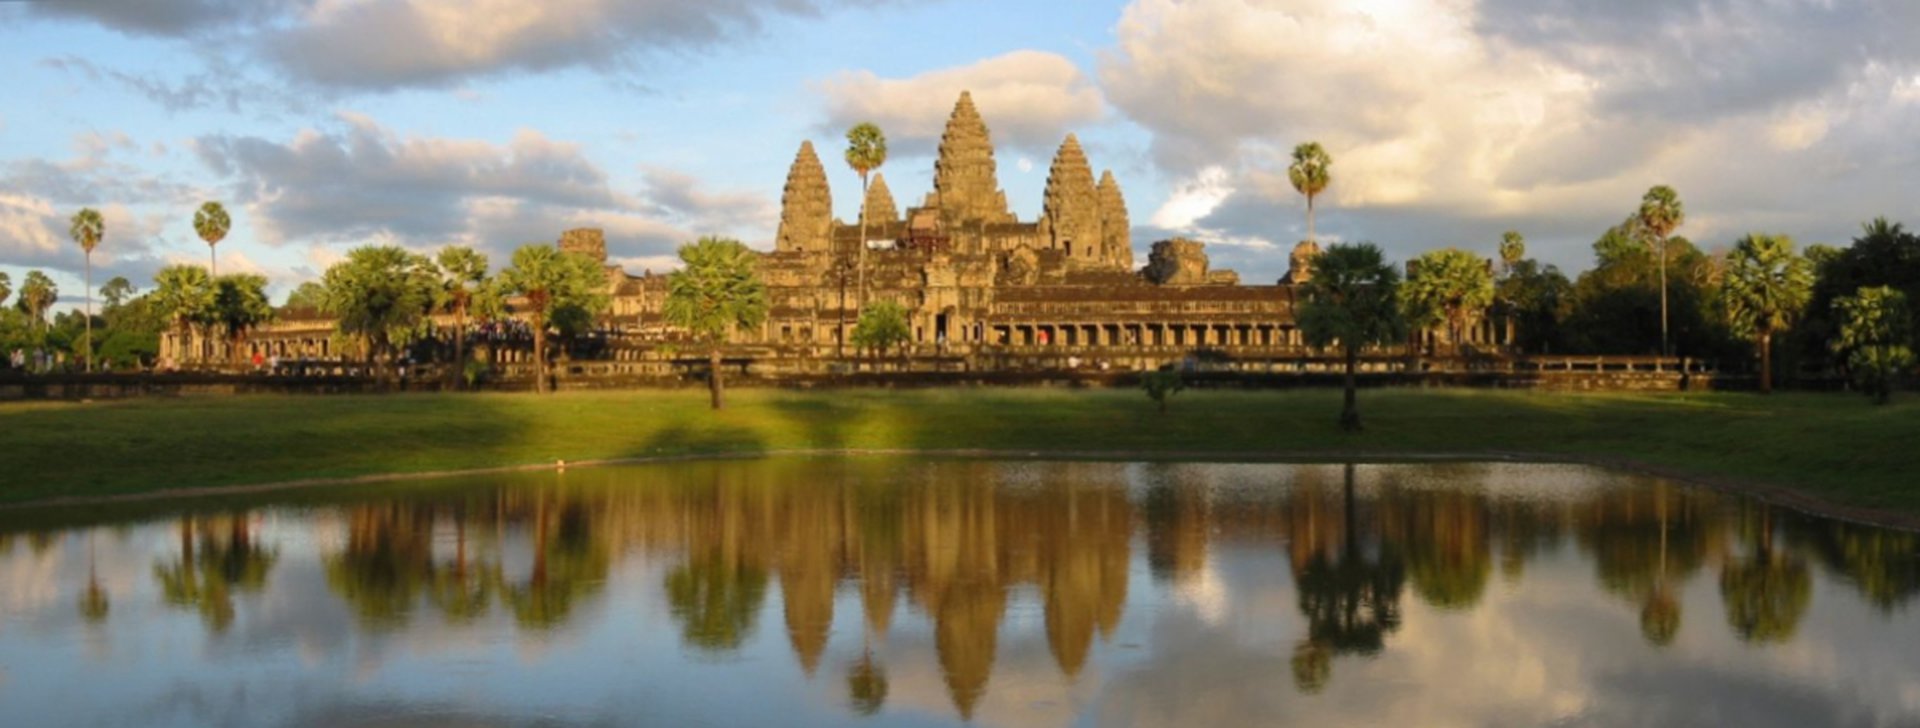 Reiseziele Kambodscha